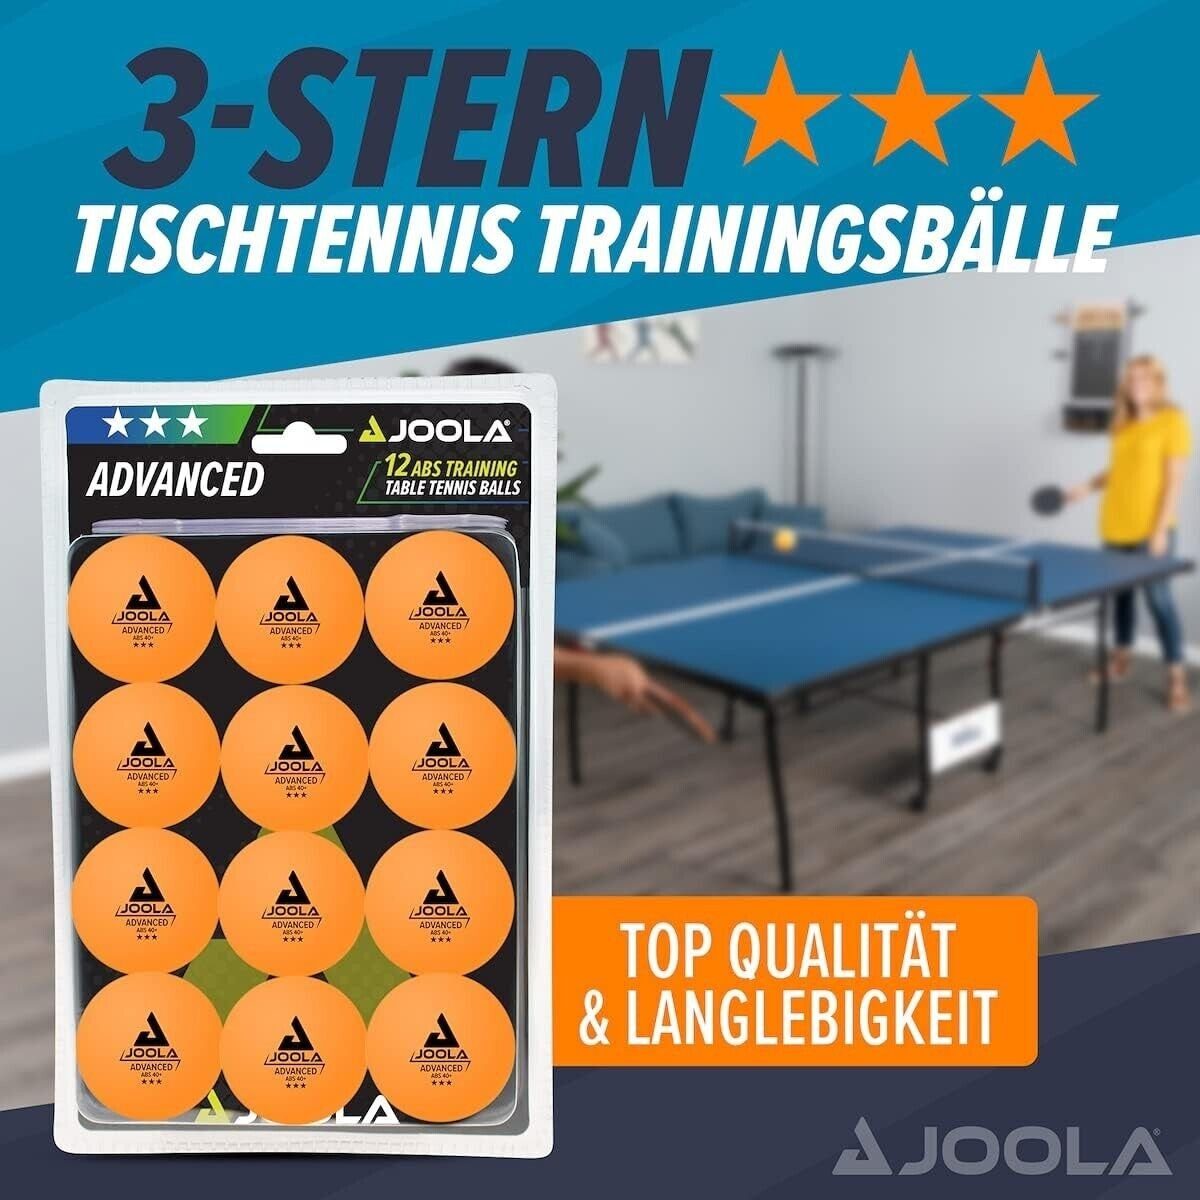 Joola Tischtennisball 12x 40mm Training Balls,Training (12er-Pack), Ping 12 Bälle Table Freizeit Pong Star,Orange 3 Tischtennis Stück Erwachsener Tennis